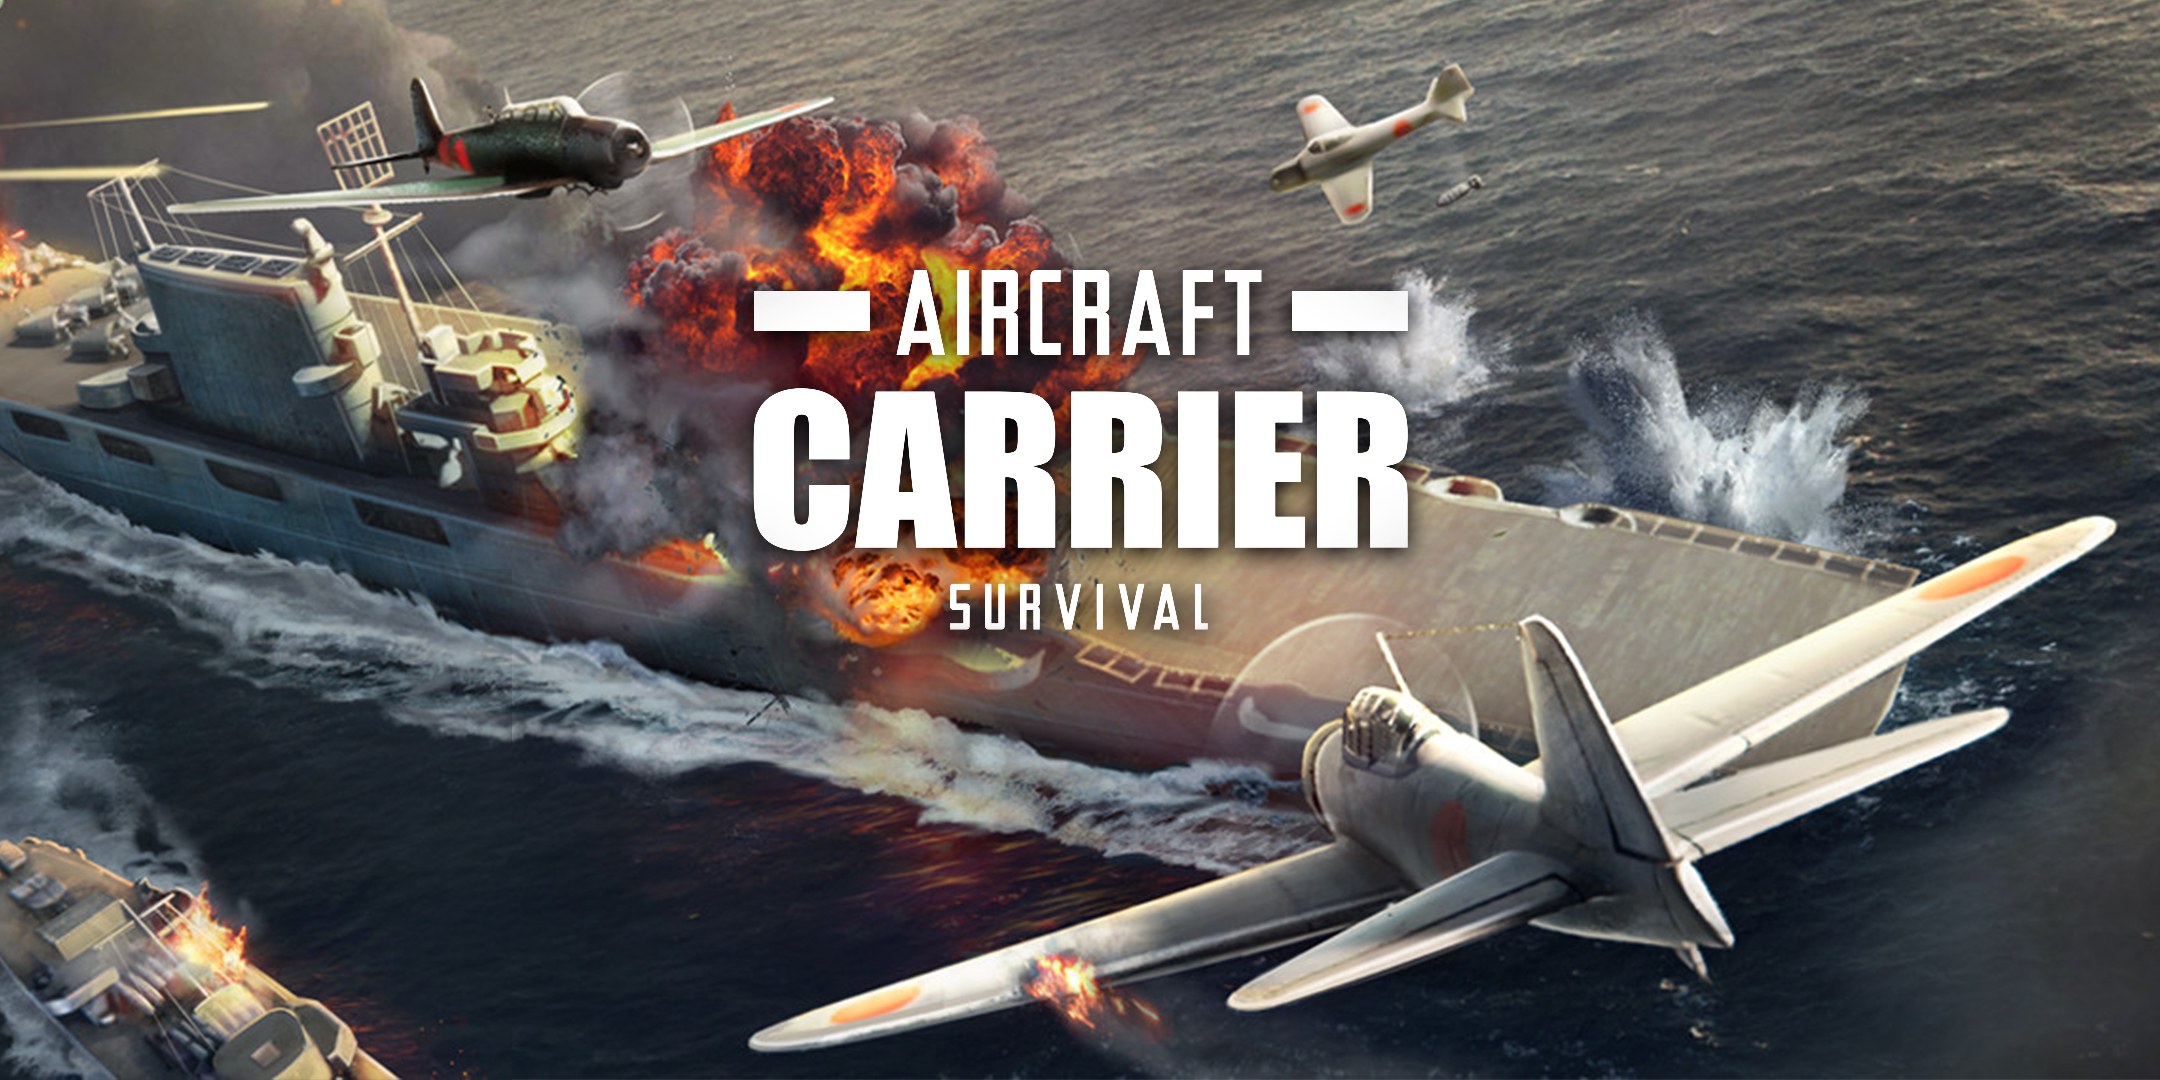 Aircraft_Carrier_ Survival_2160x1080